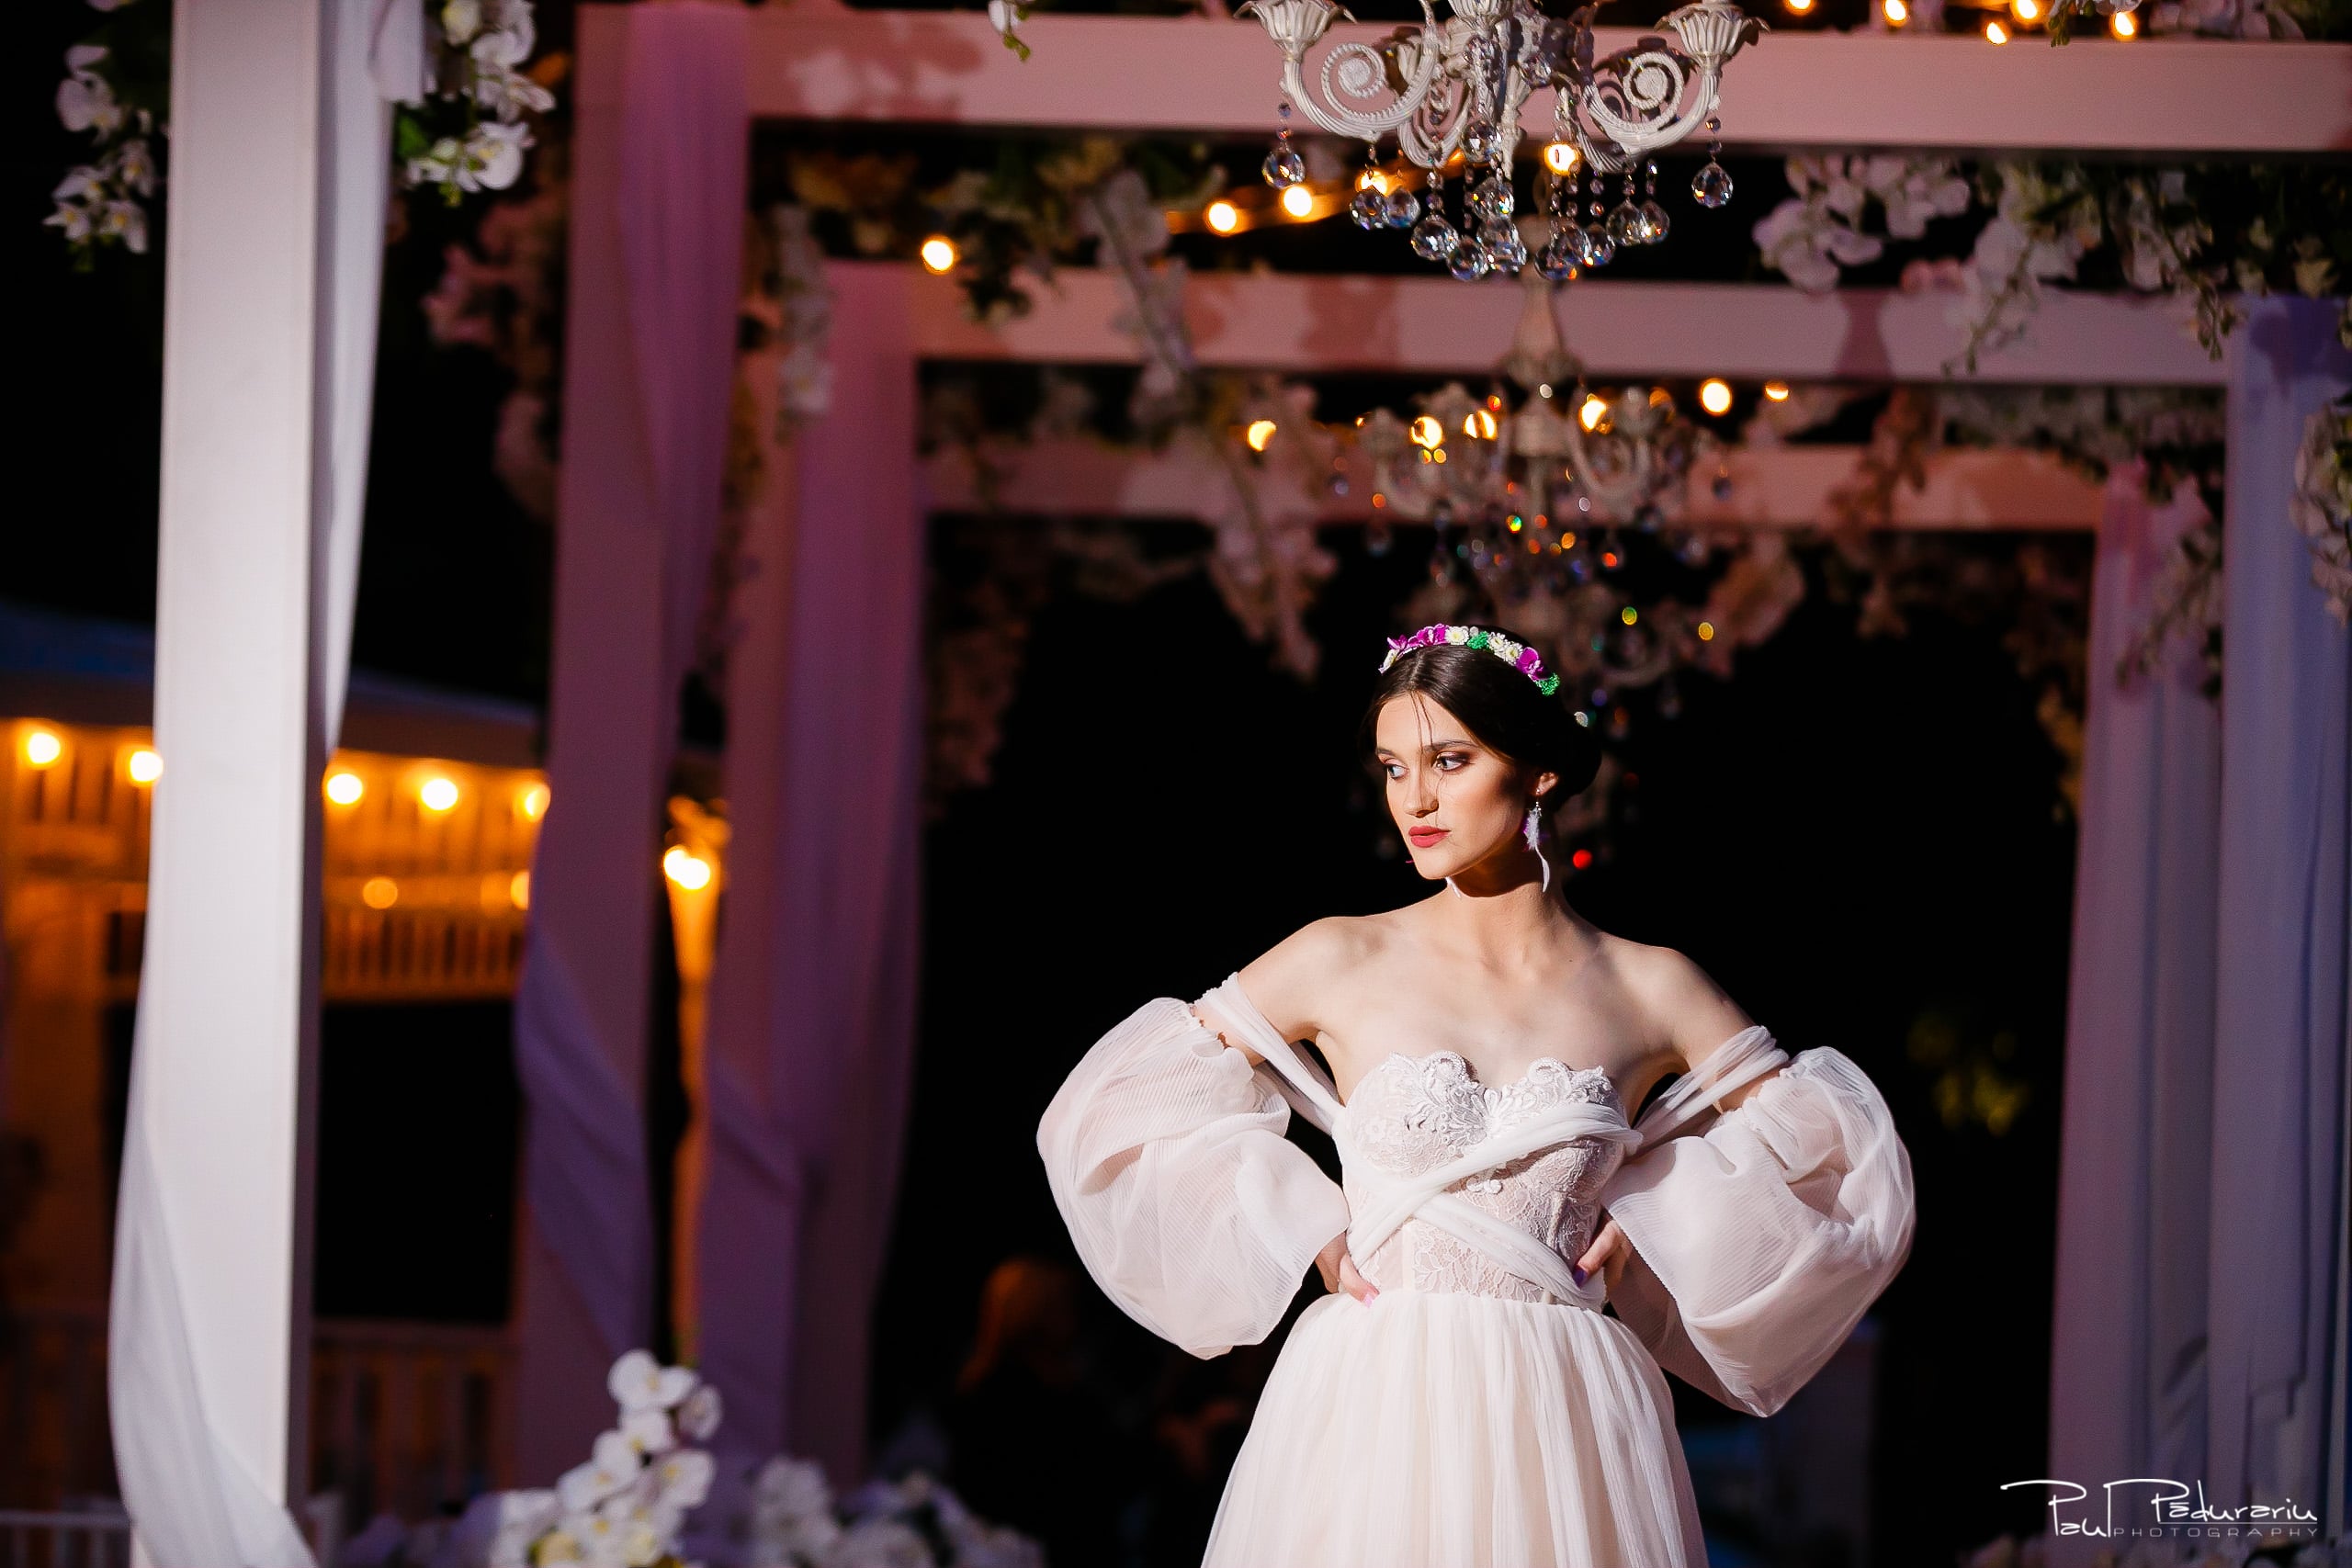 Modern Bride Edith Val colectie rochie mireasa 2019 - fotograf profesionist iasi paul padurariu | nunta iasi 25